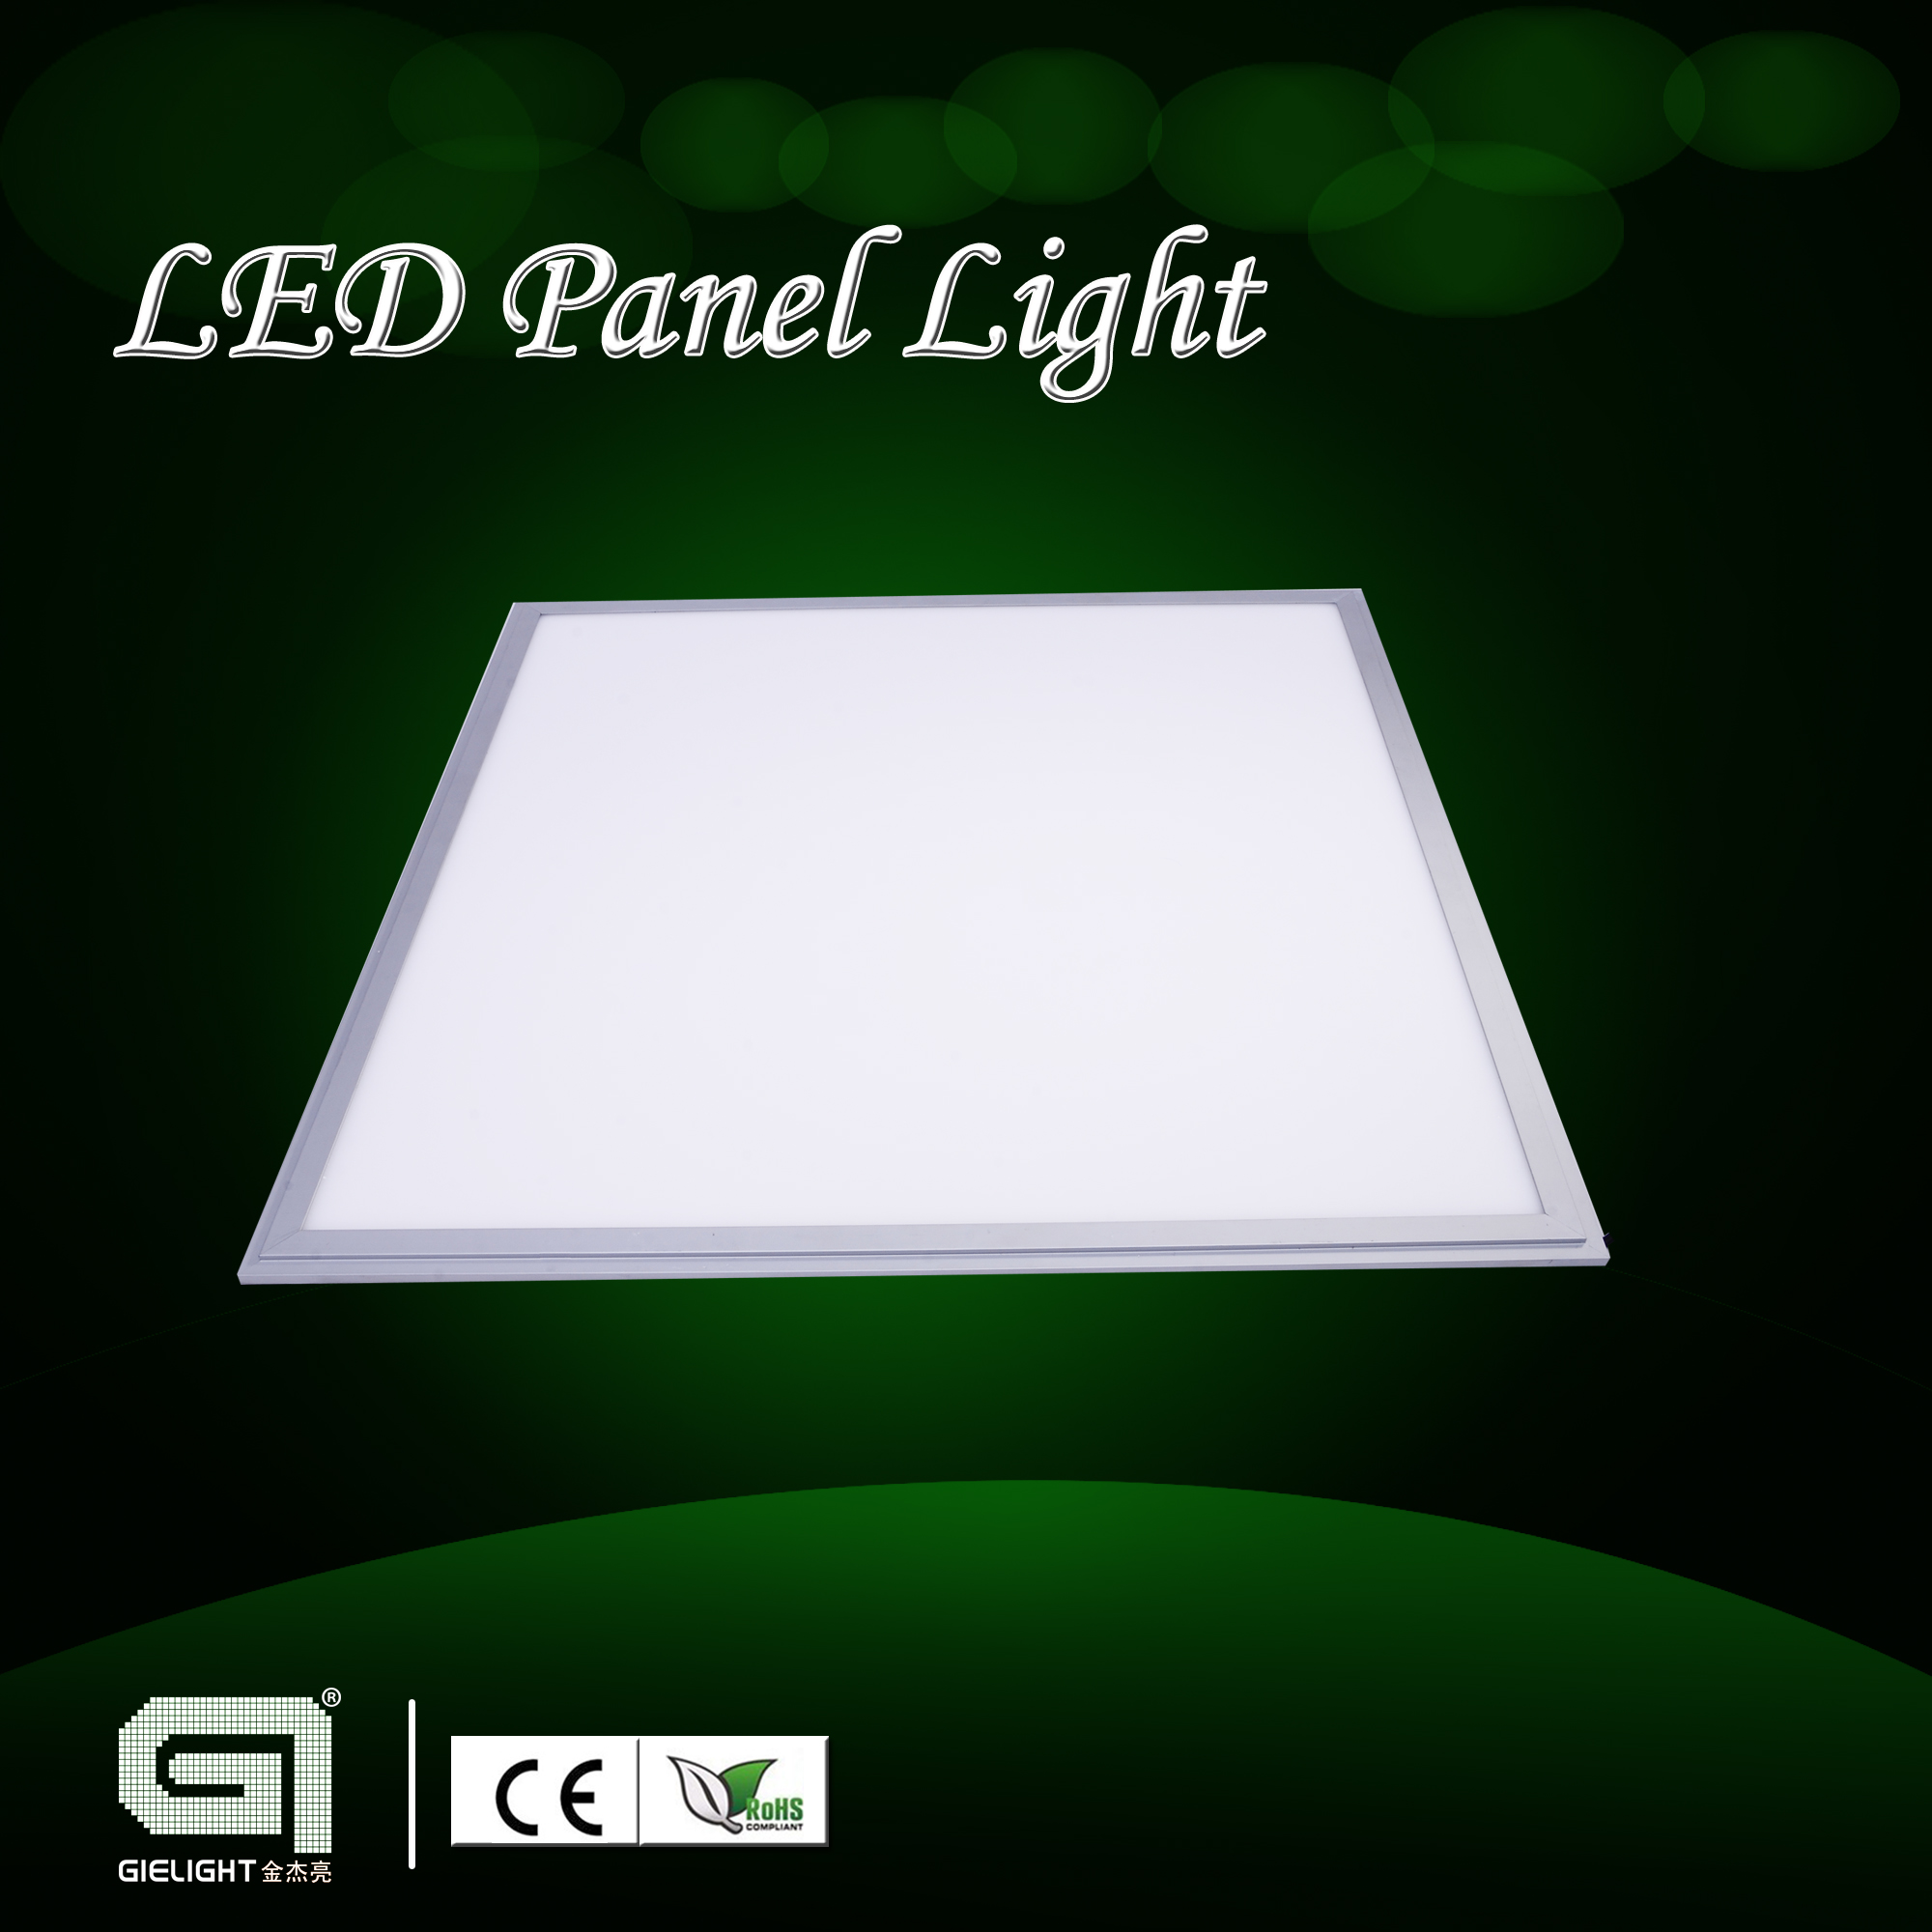 Germany 90lm/w High Lumen flexible led light panel ra>80 62*62cm 10mm 43w (3 years warranty) CE, RoH